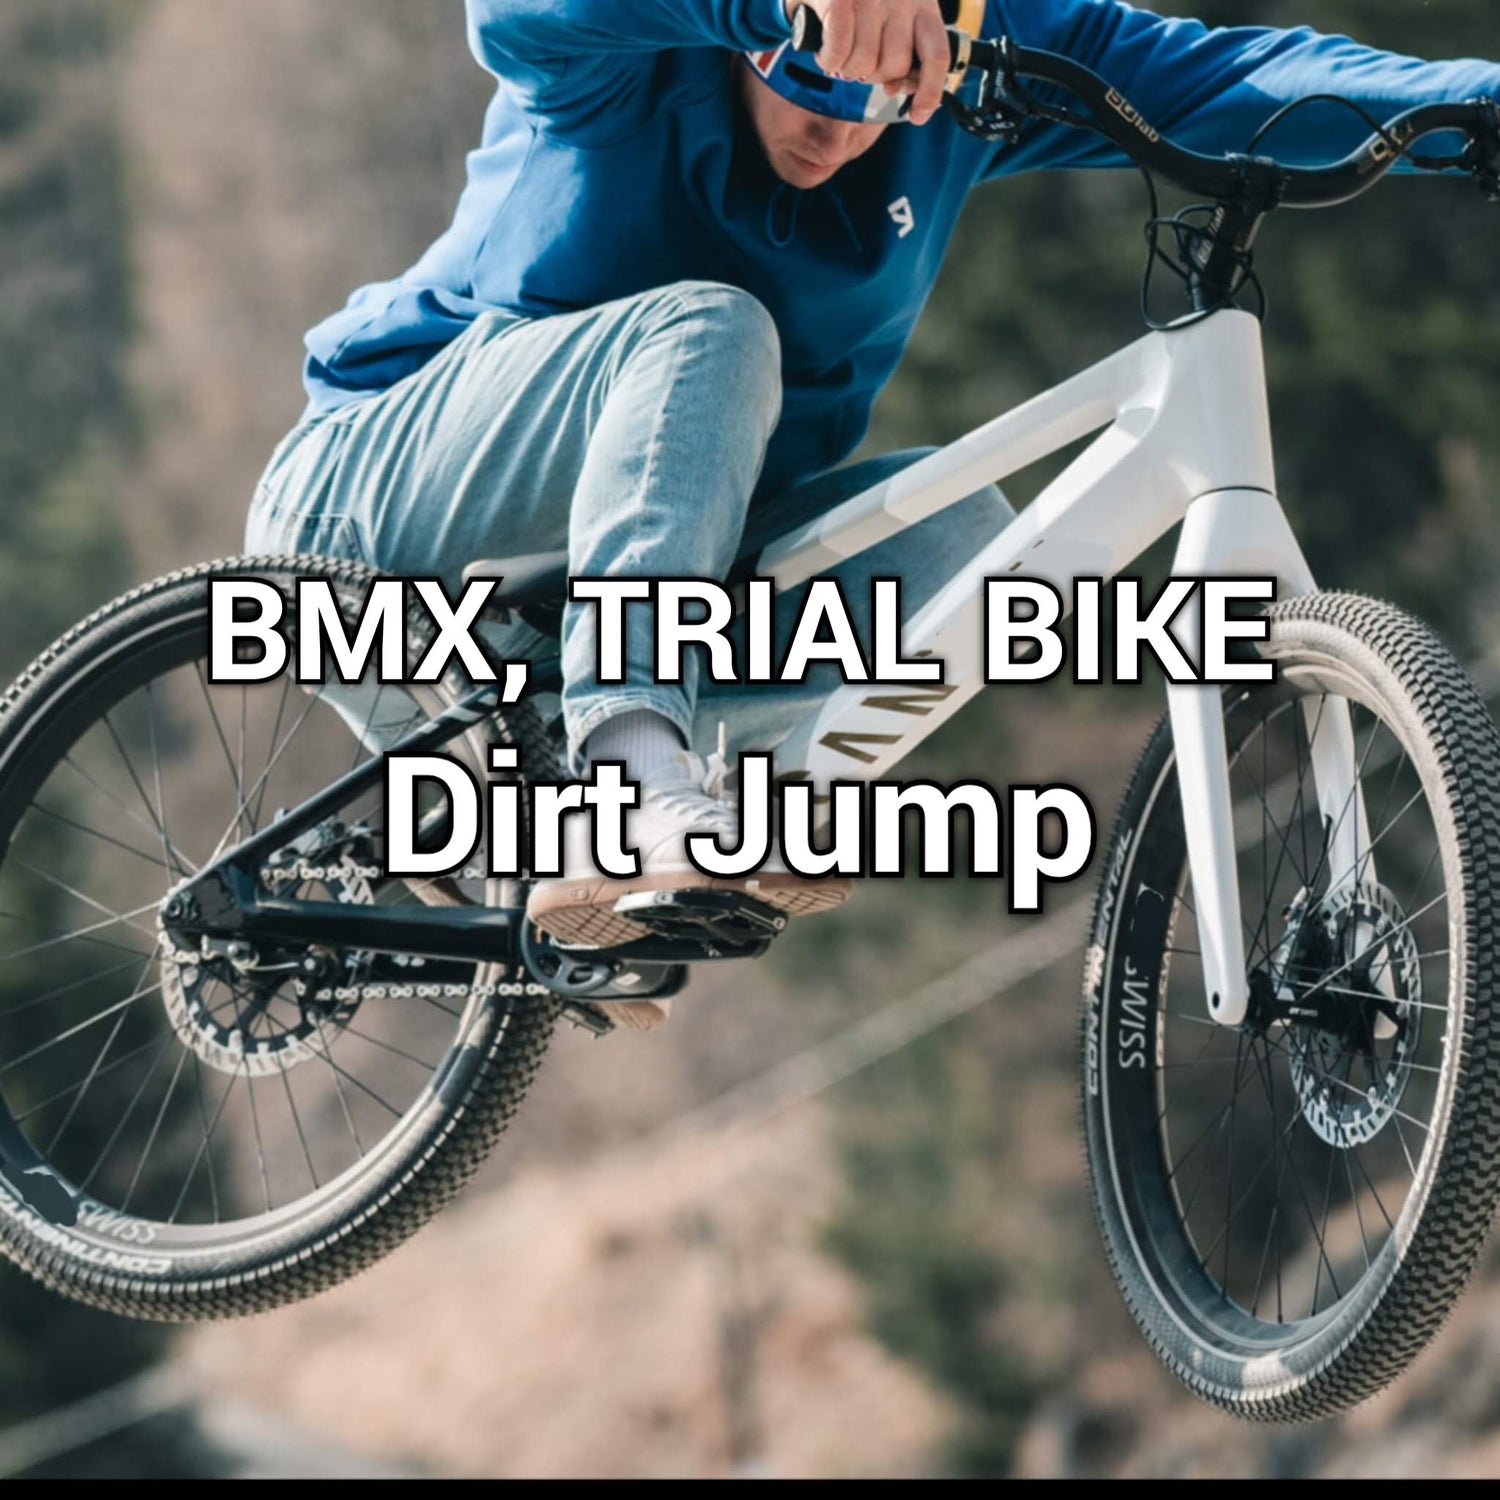 Ti for BMX, Dirt Jump, Trial Bike